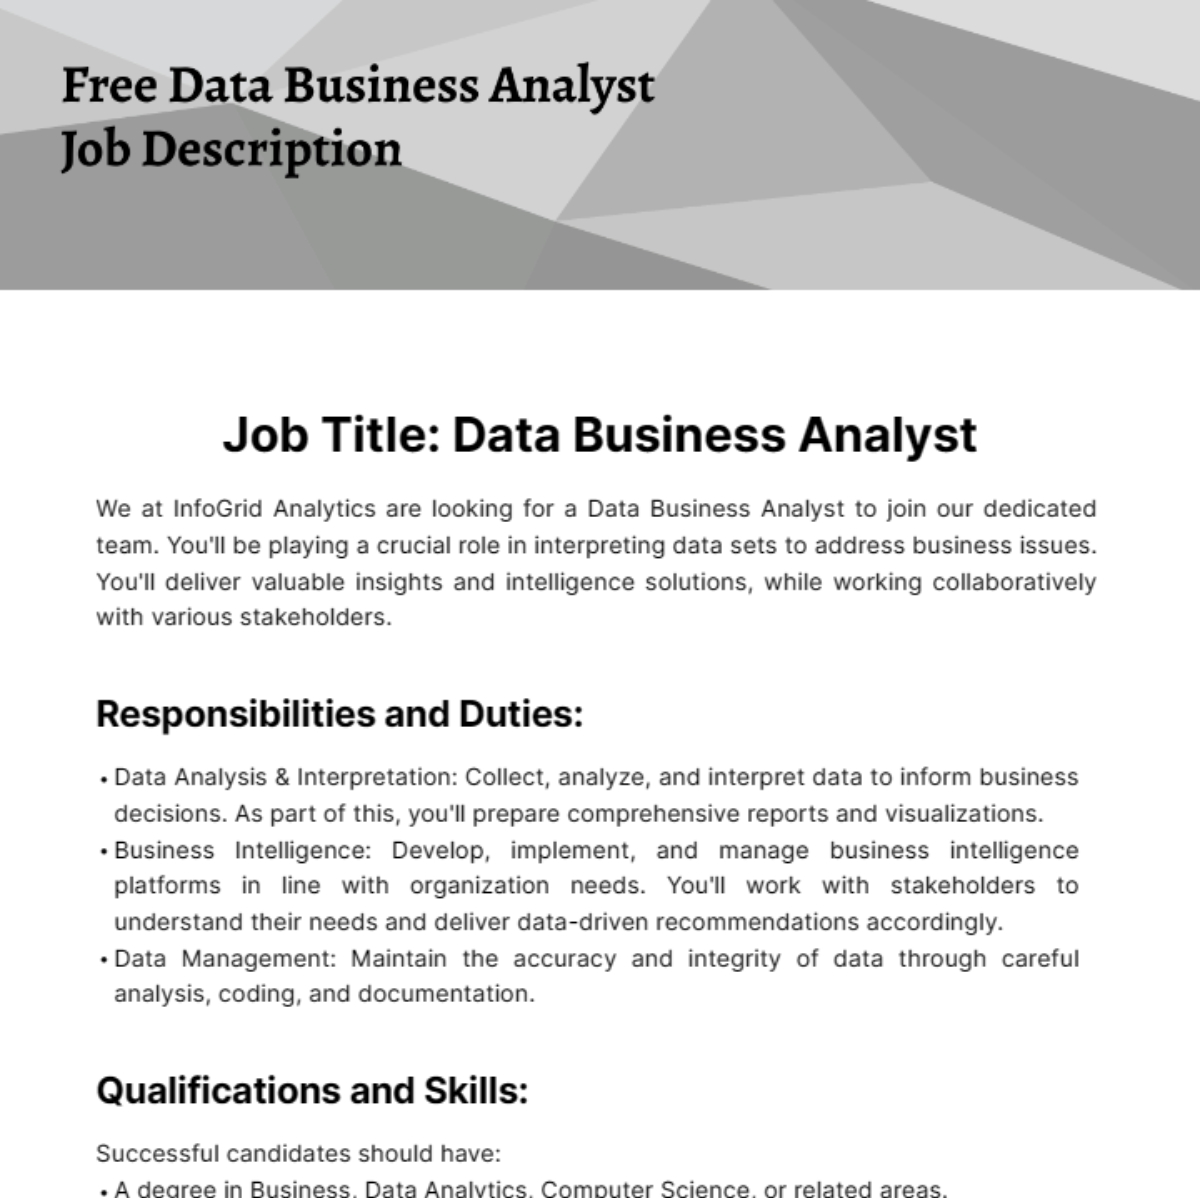 Free Data Business Analyst Job Description Template